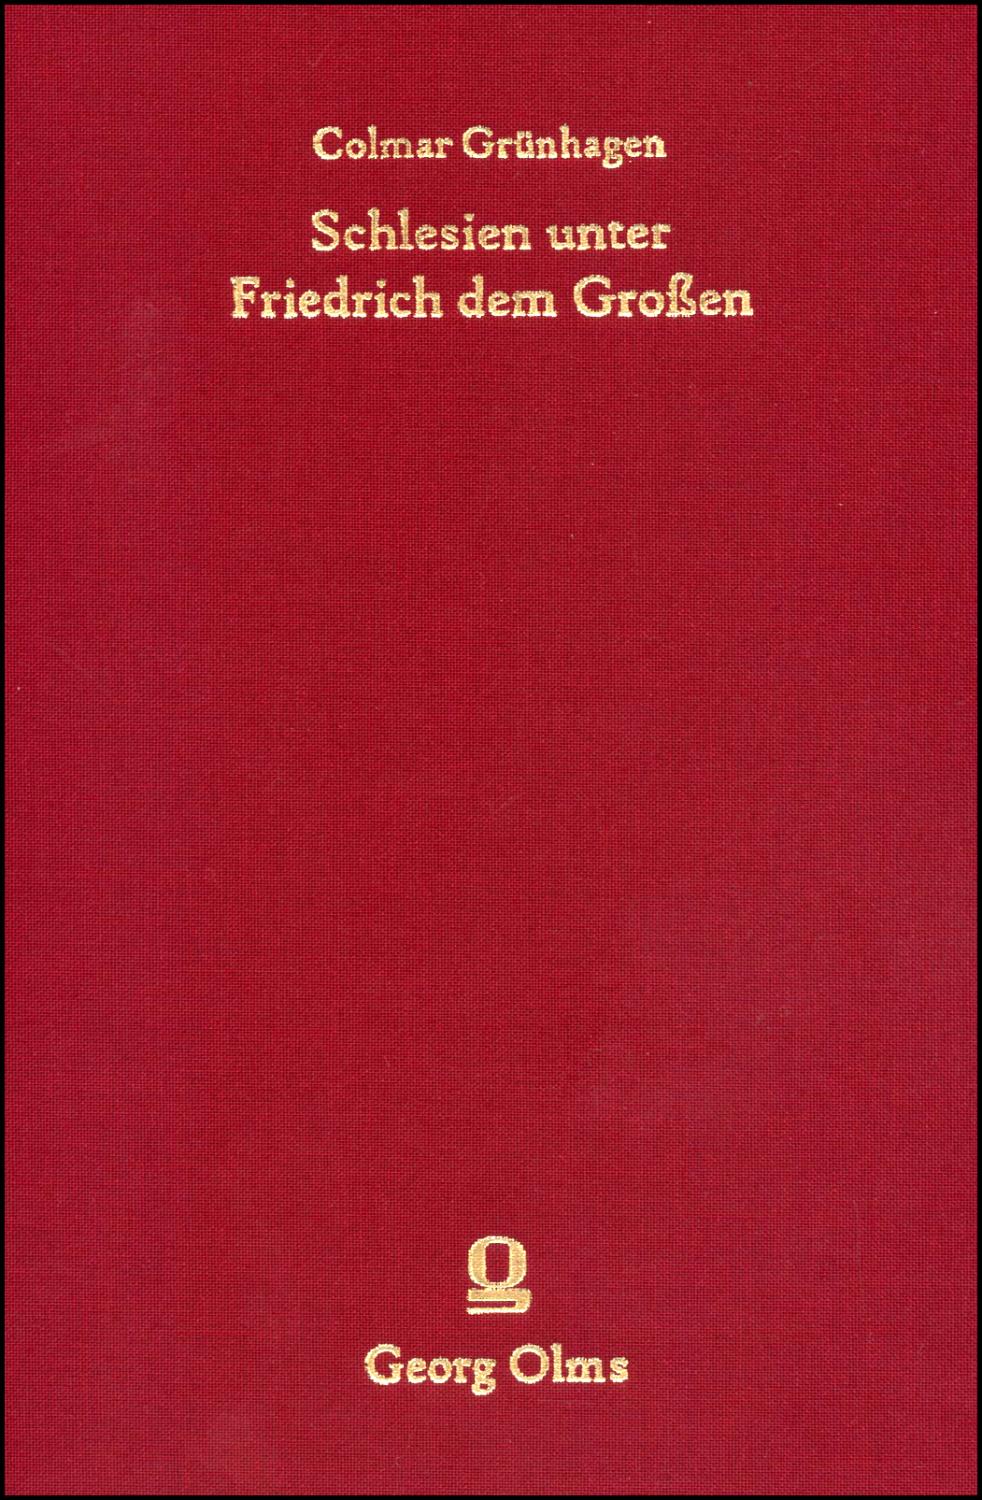 Schlesien unter Friedrich dem Großen. Band 2: 1756 1786. Hrsg. Peter Baumgart.Breslau 1892. Reprint: Hildesheim 2006. IV/624 S.